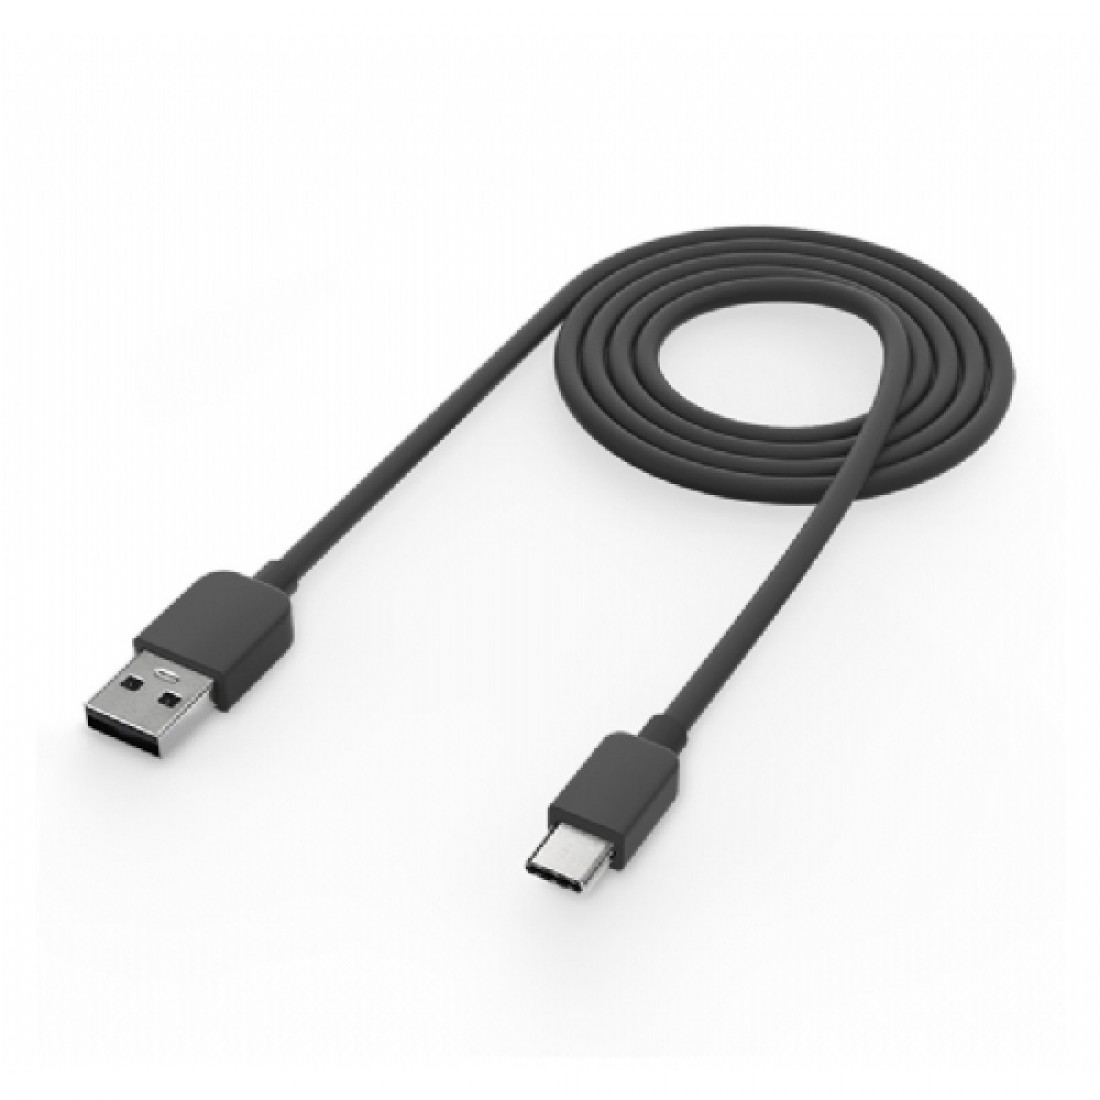 Pro c кабель. USB кабель HTC Type-c. Кабель для зарядки USB С (Type-c, Type-c) 3м. Юсб кабель для HTC. Провод Type c Charging Cable.